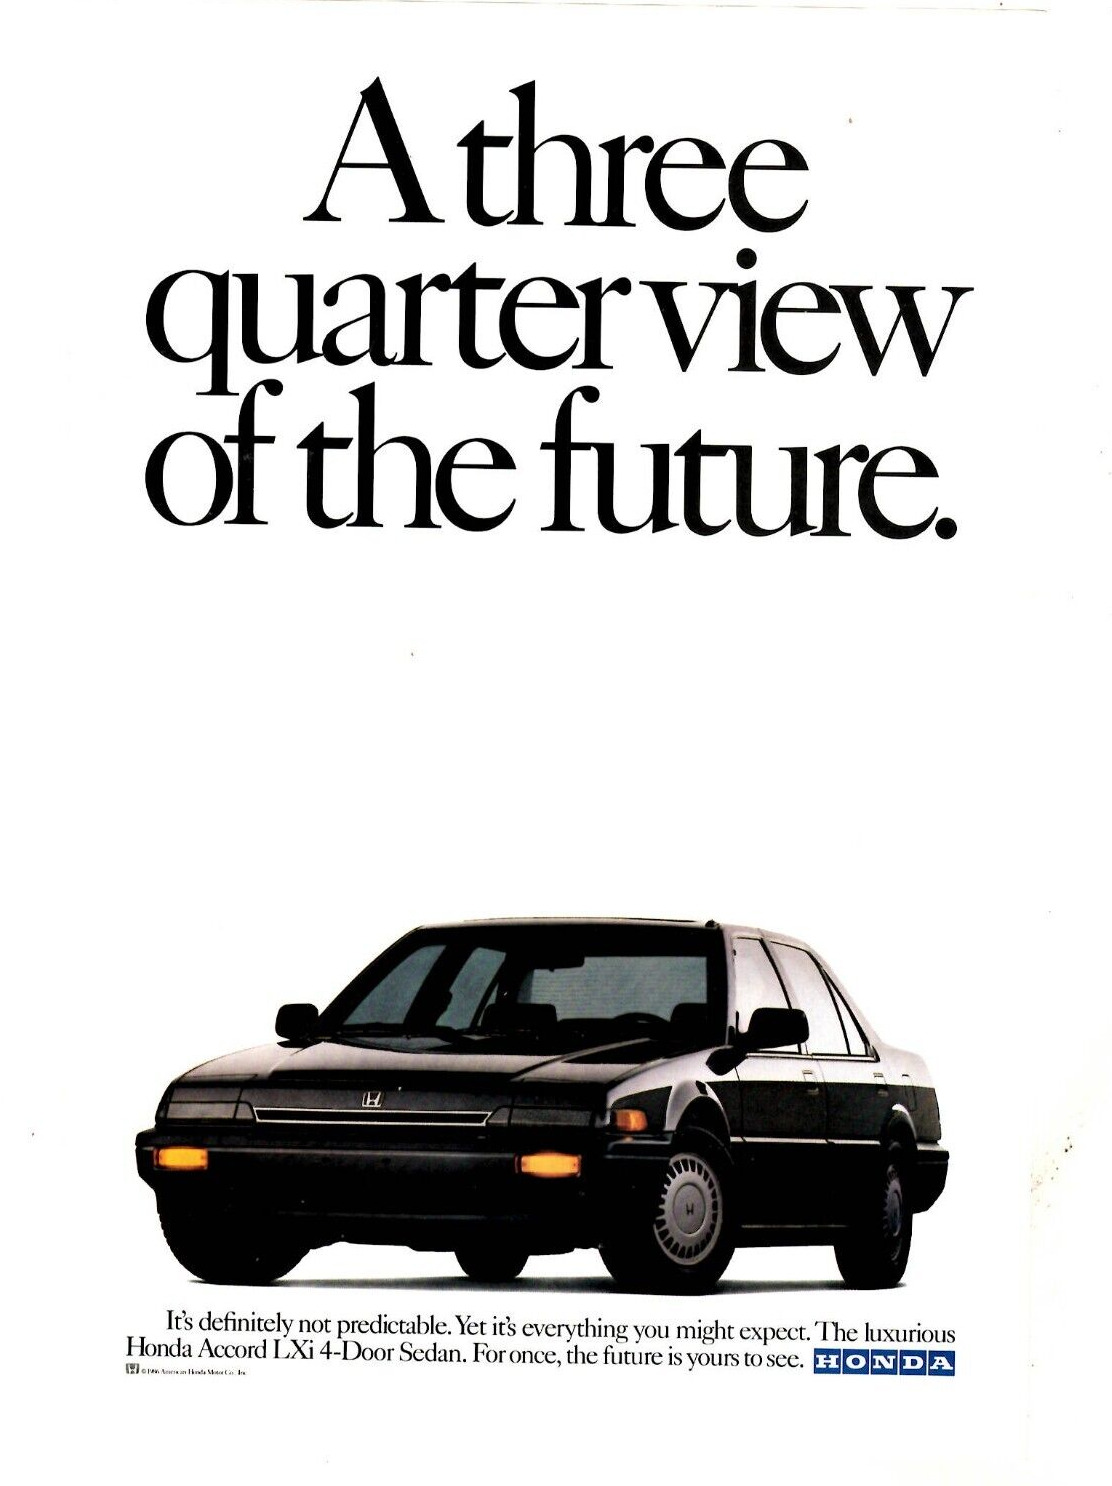 1987 Print Ad Honda Accord LXi 4-Door Sedan A three quarter view of the future